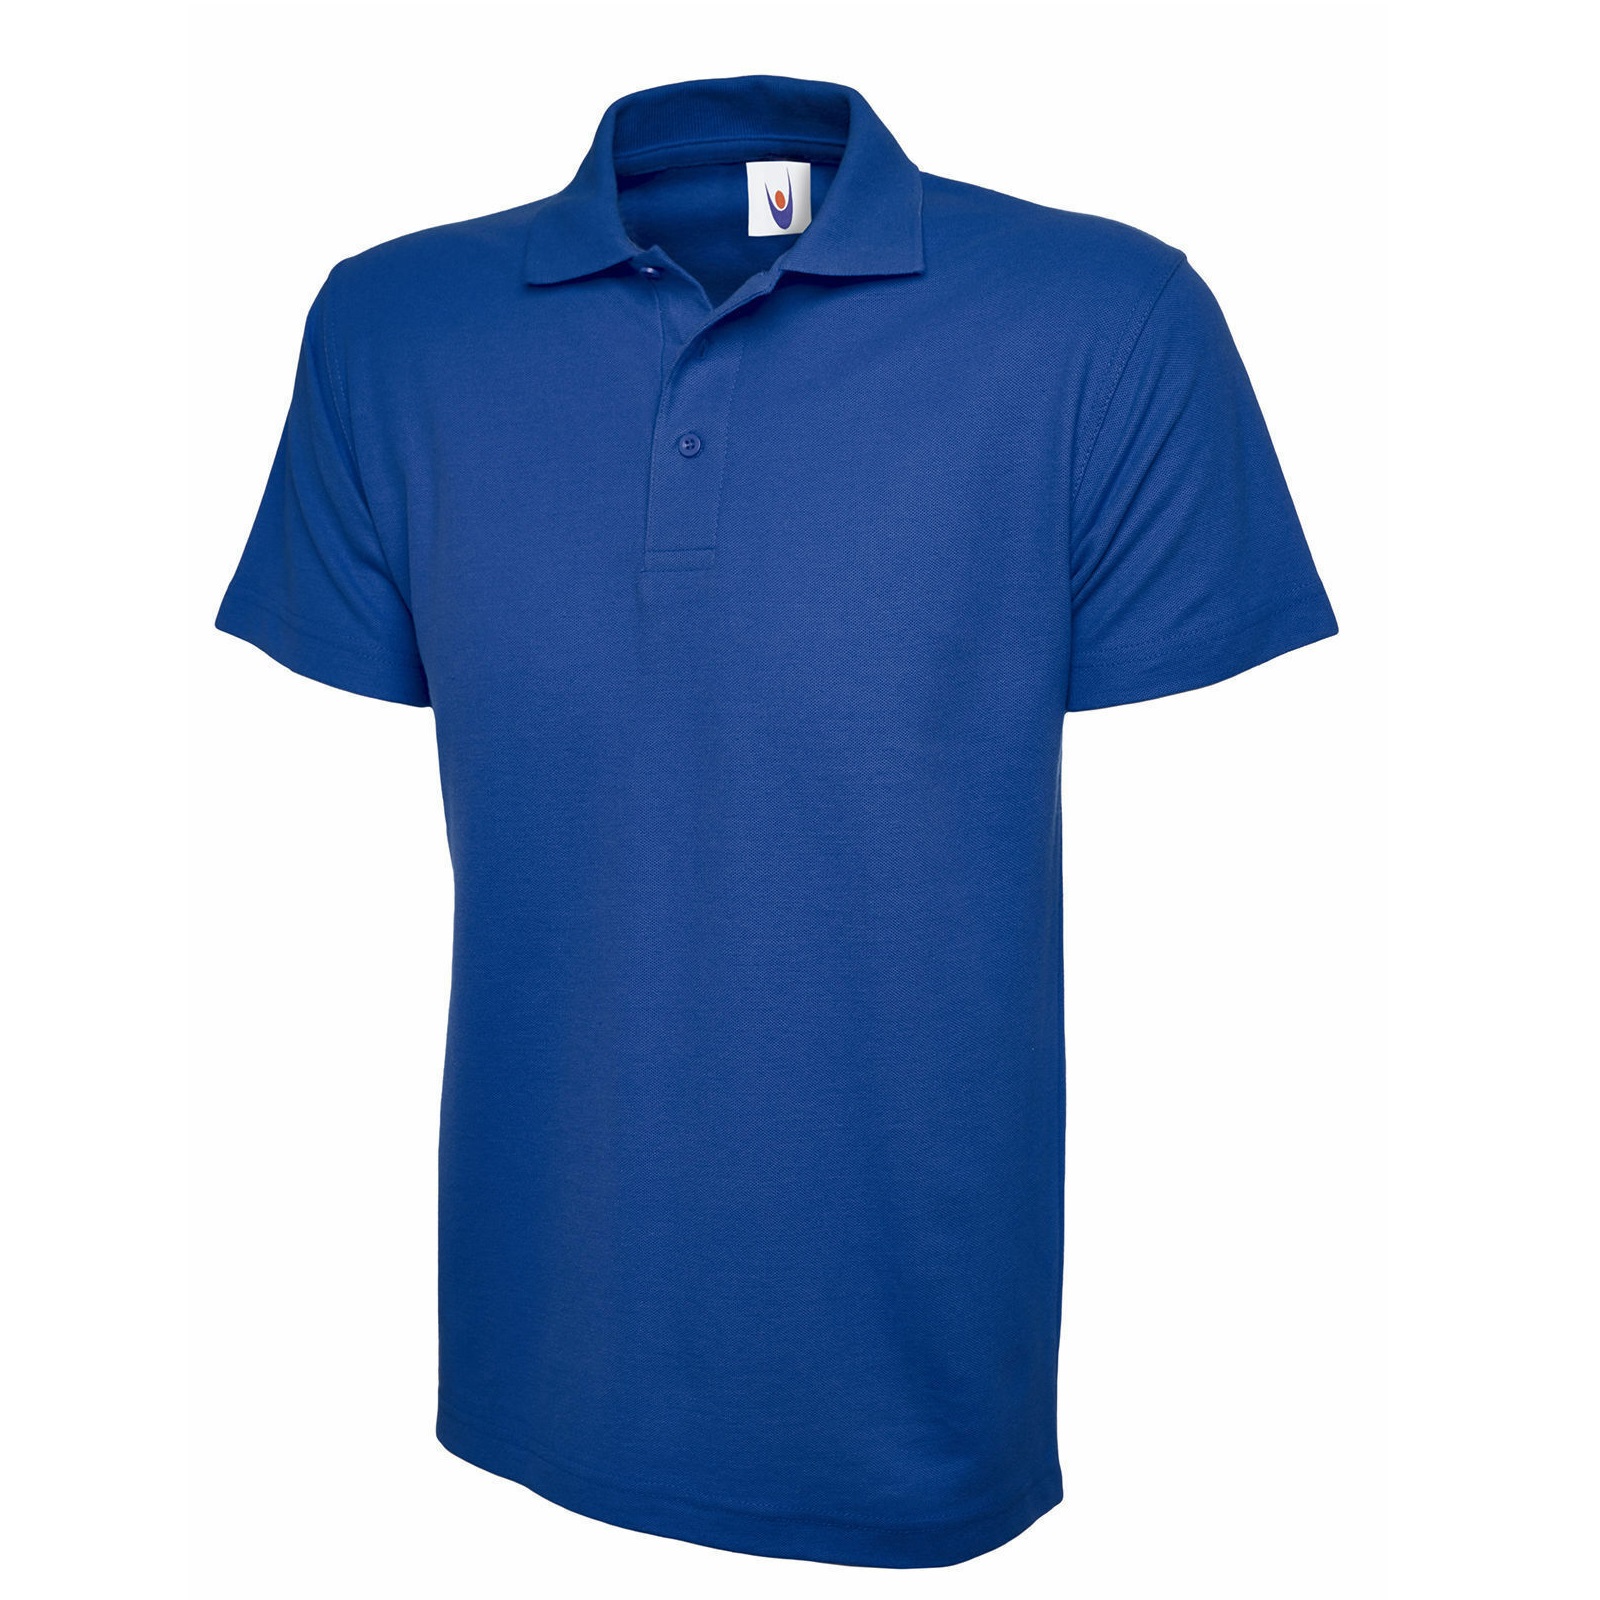 Polo T-Shirt Regular Fit for Boys & Girls School Uniform-ROYAL BLUE ...